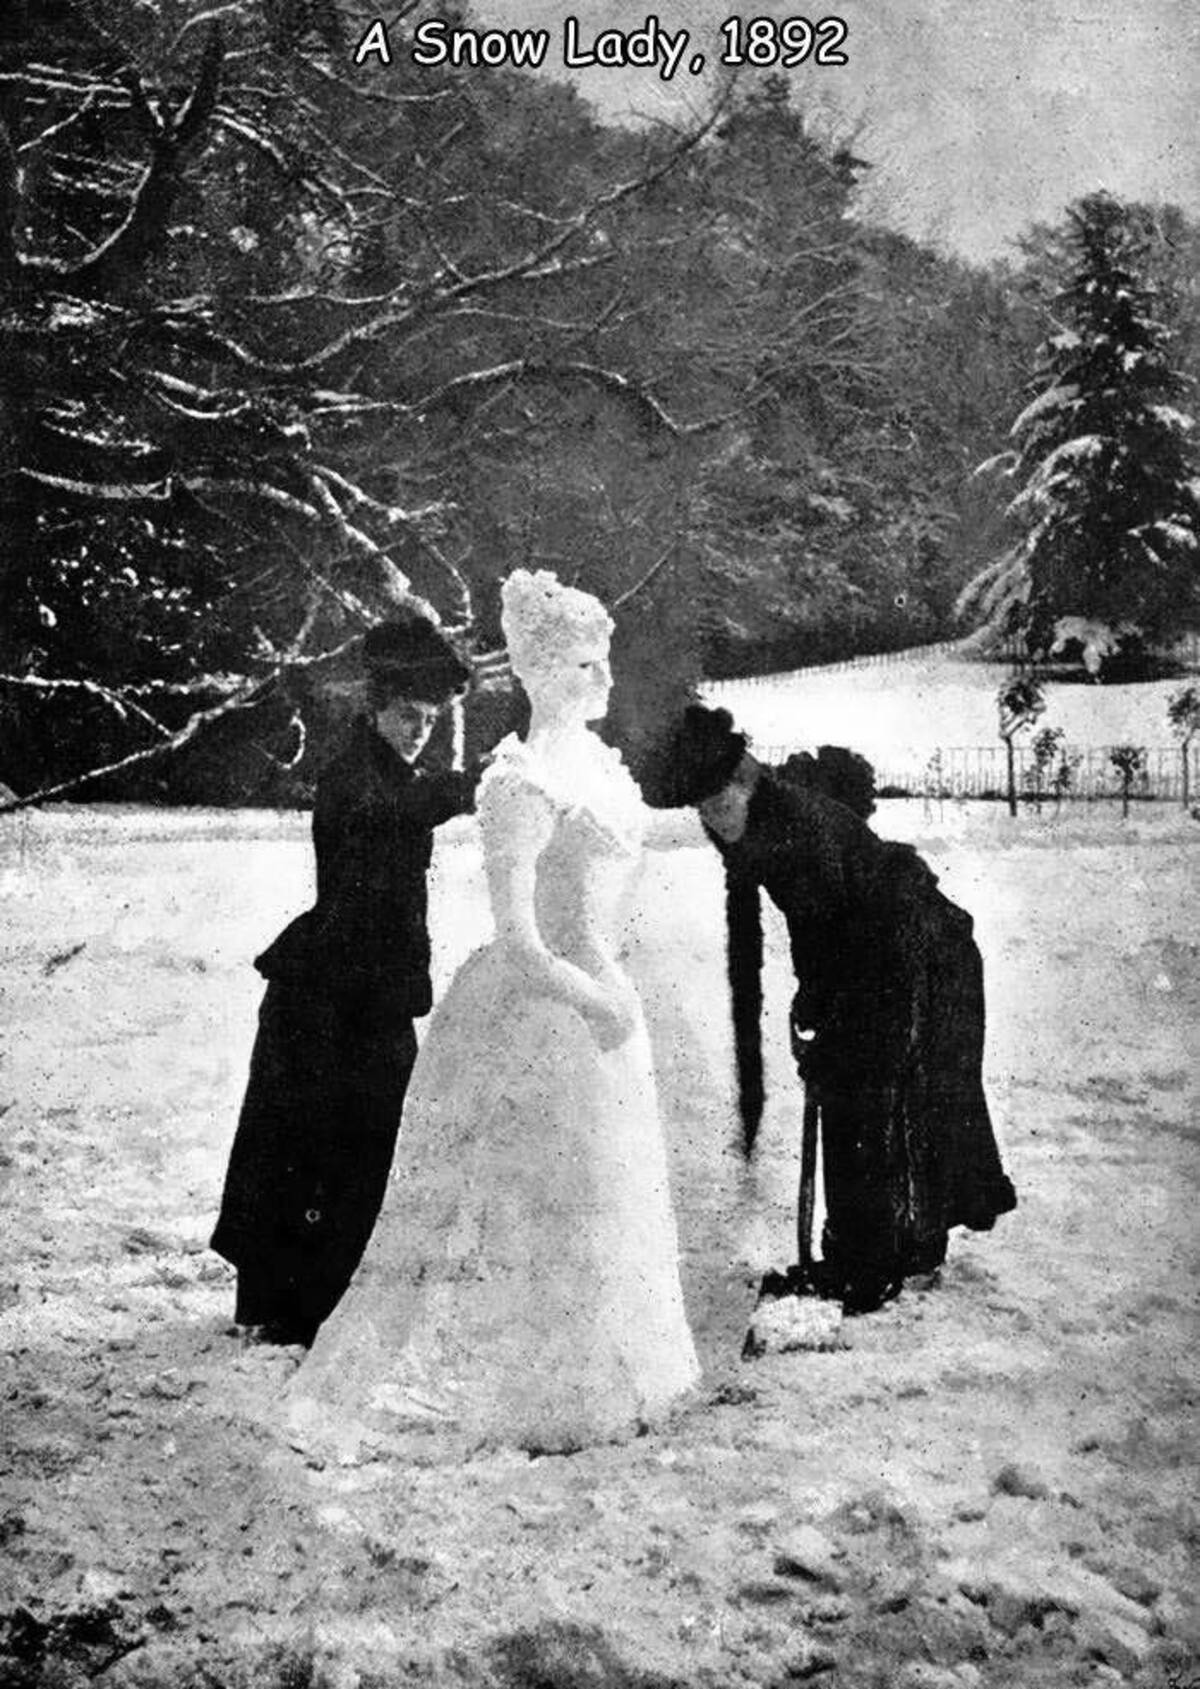 snow lady 1892 - A Snow Lady, 1892